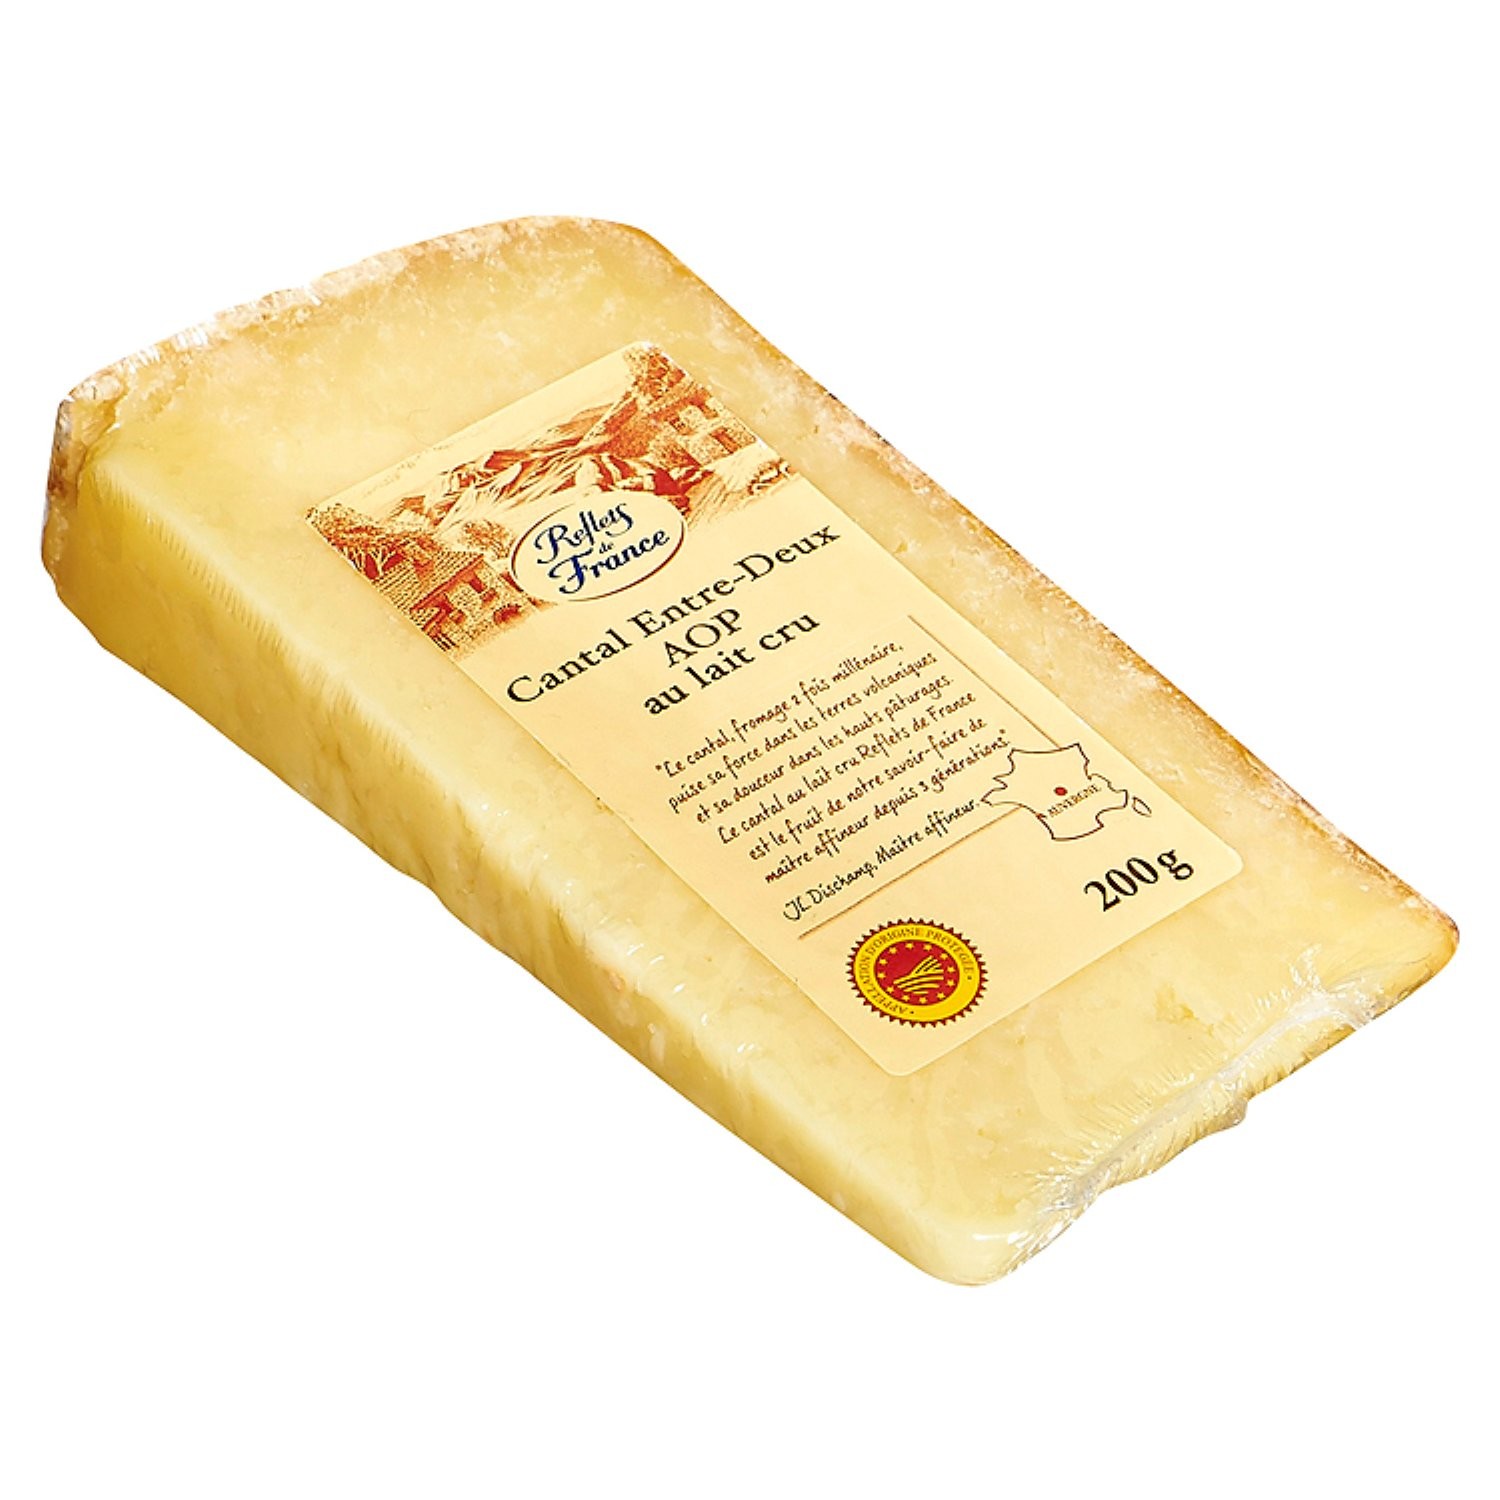 Reflets de France Cantal cheese 200g